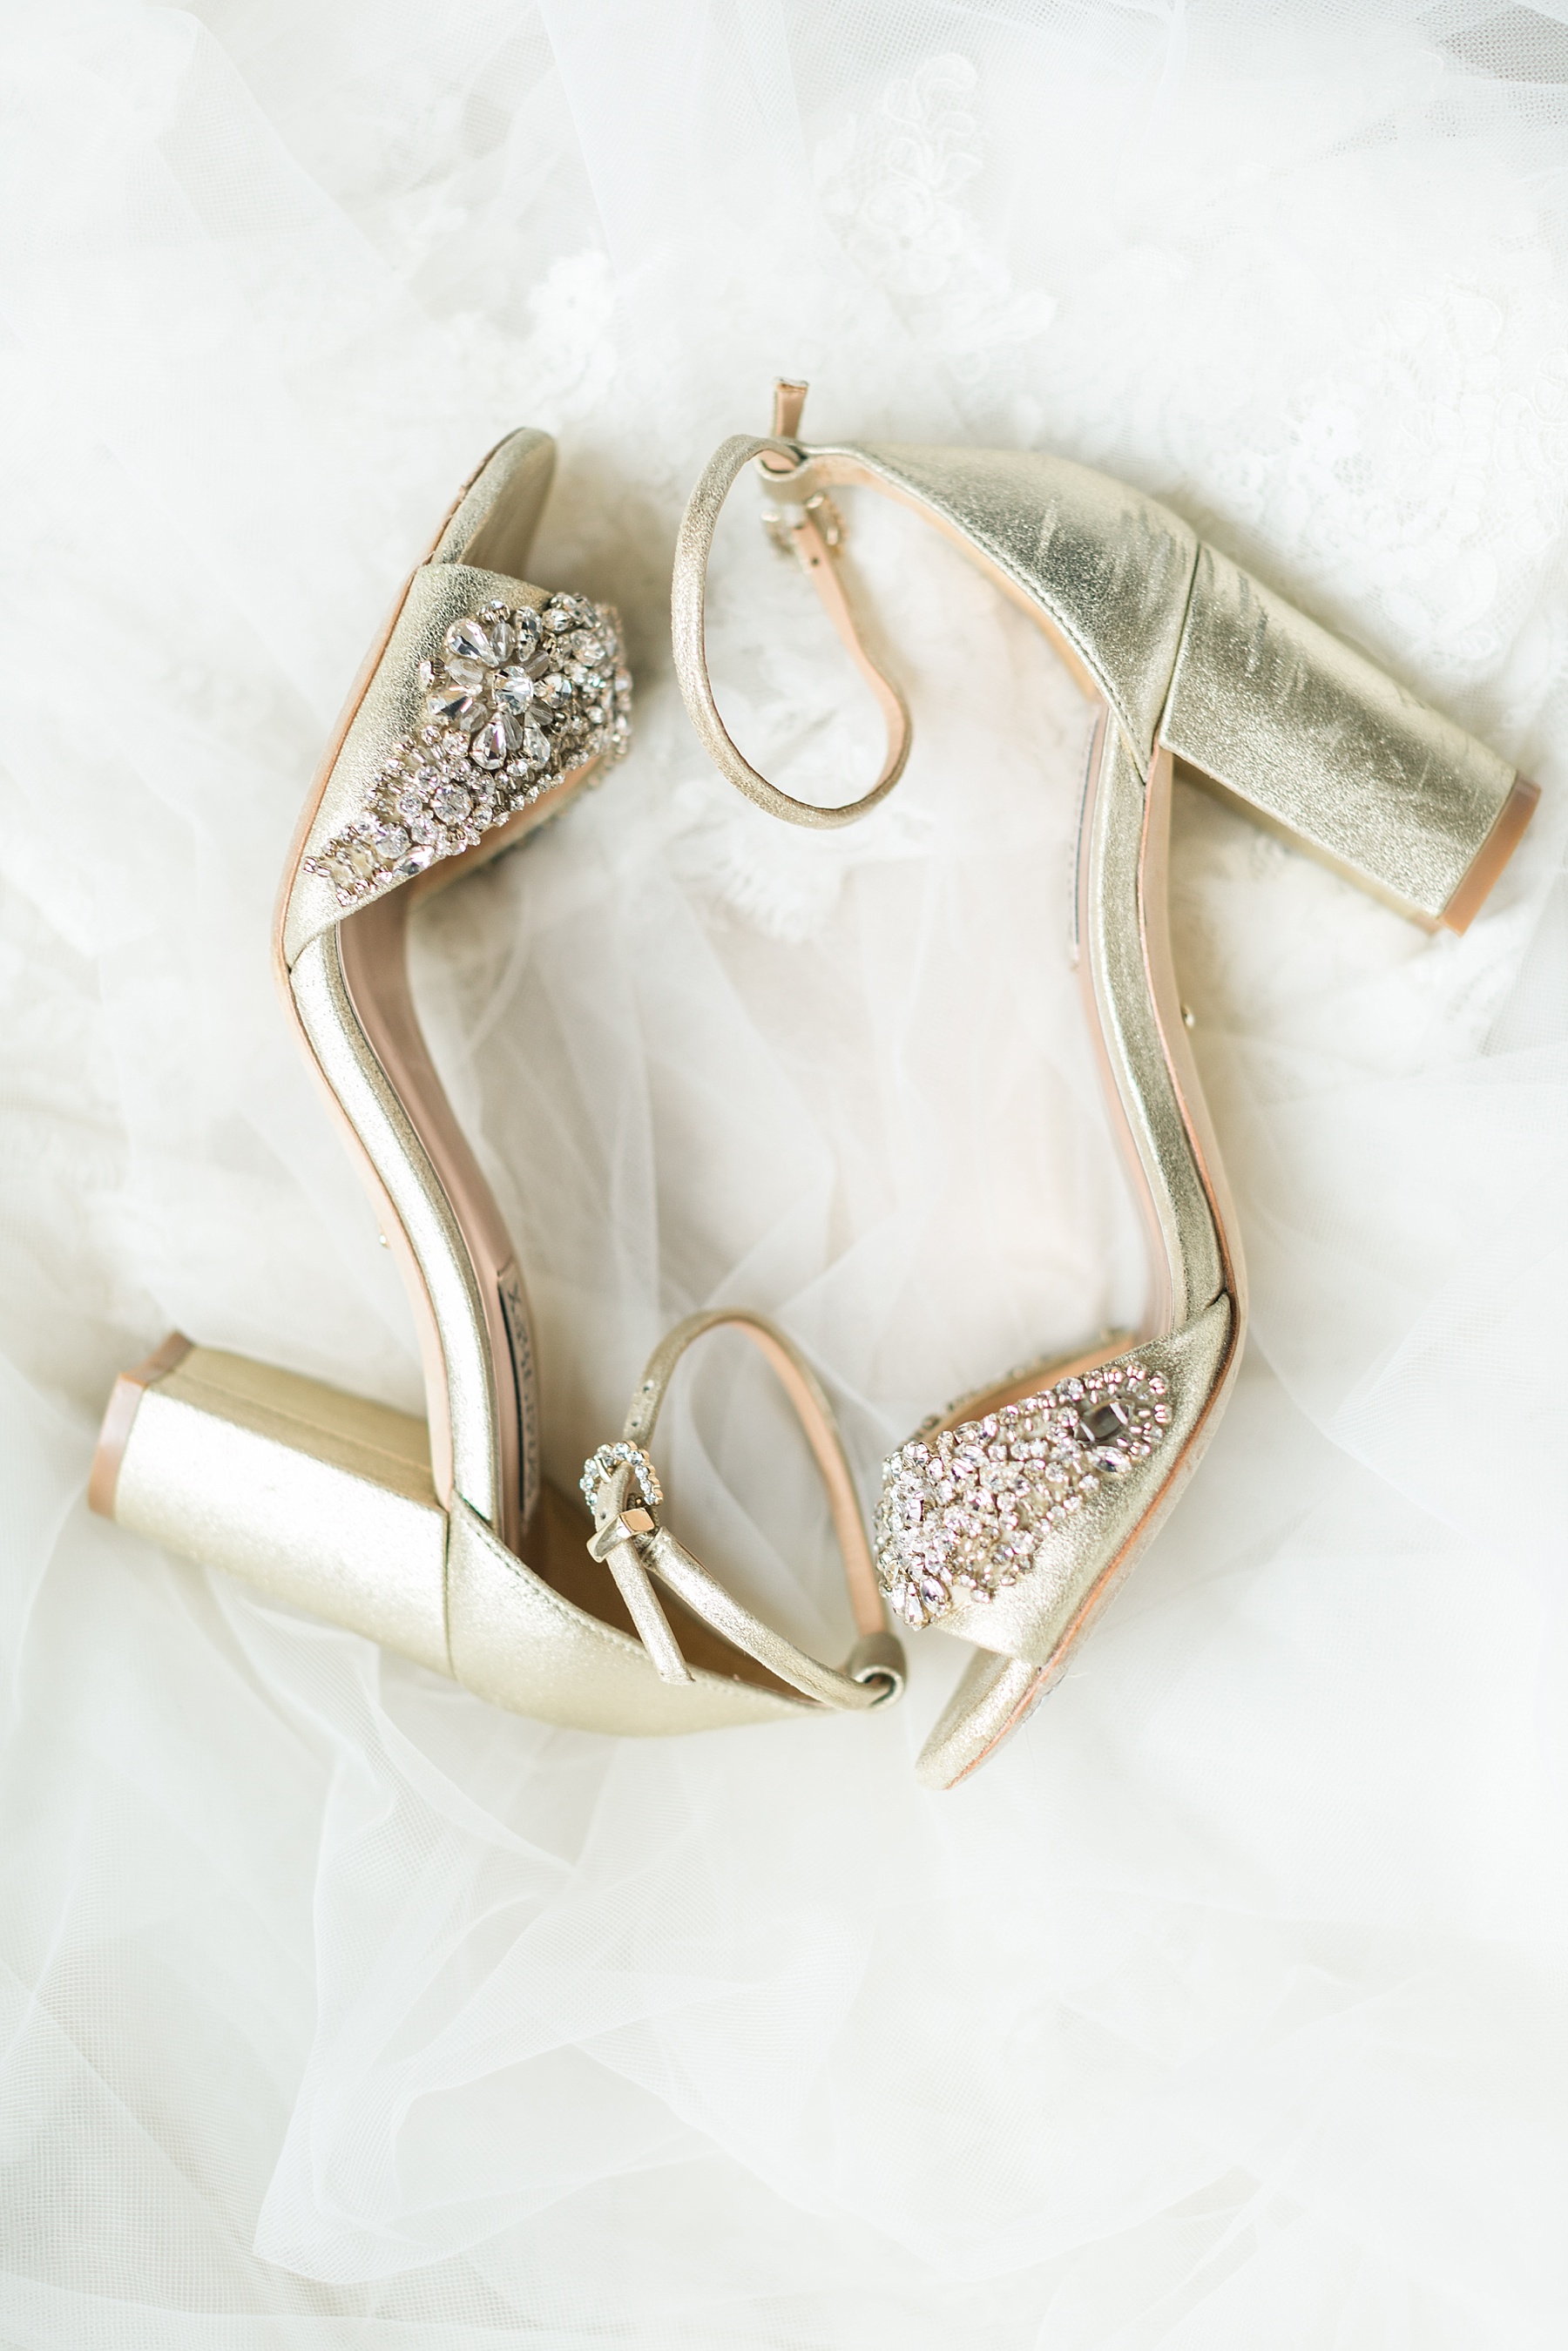  Alexandra Mandato Photography photographs bride's gold shoes